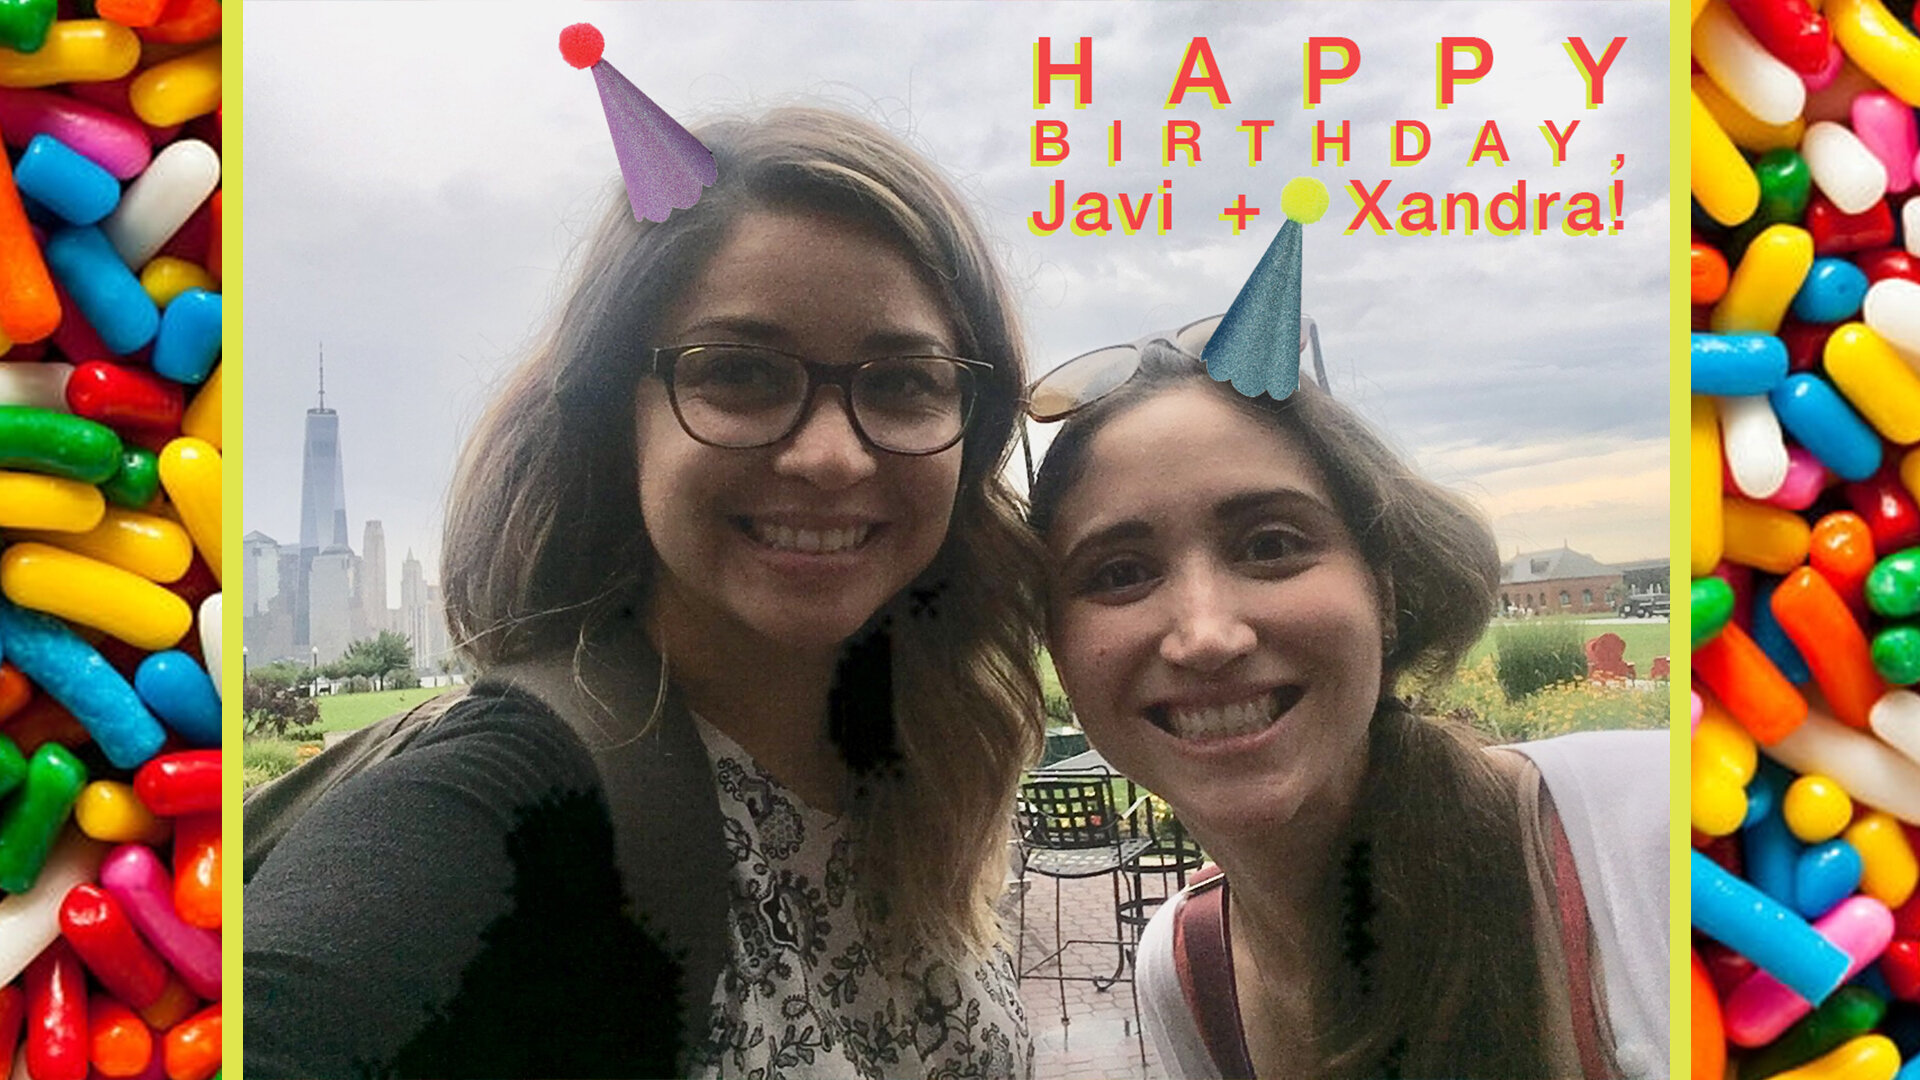 Javi and Xandra's zoom birthday background